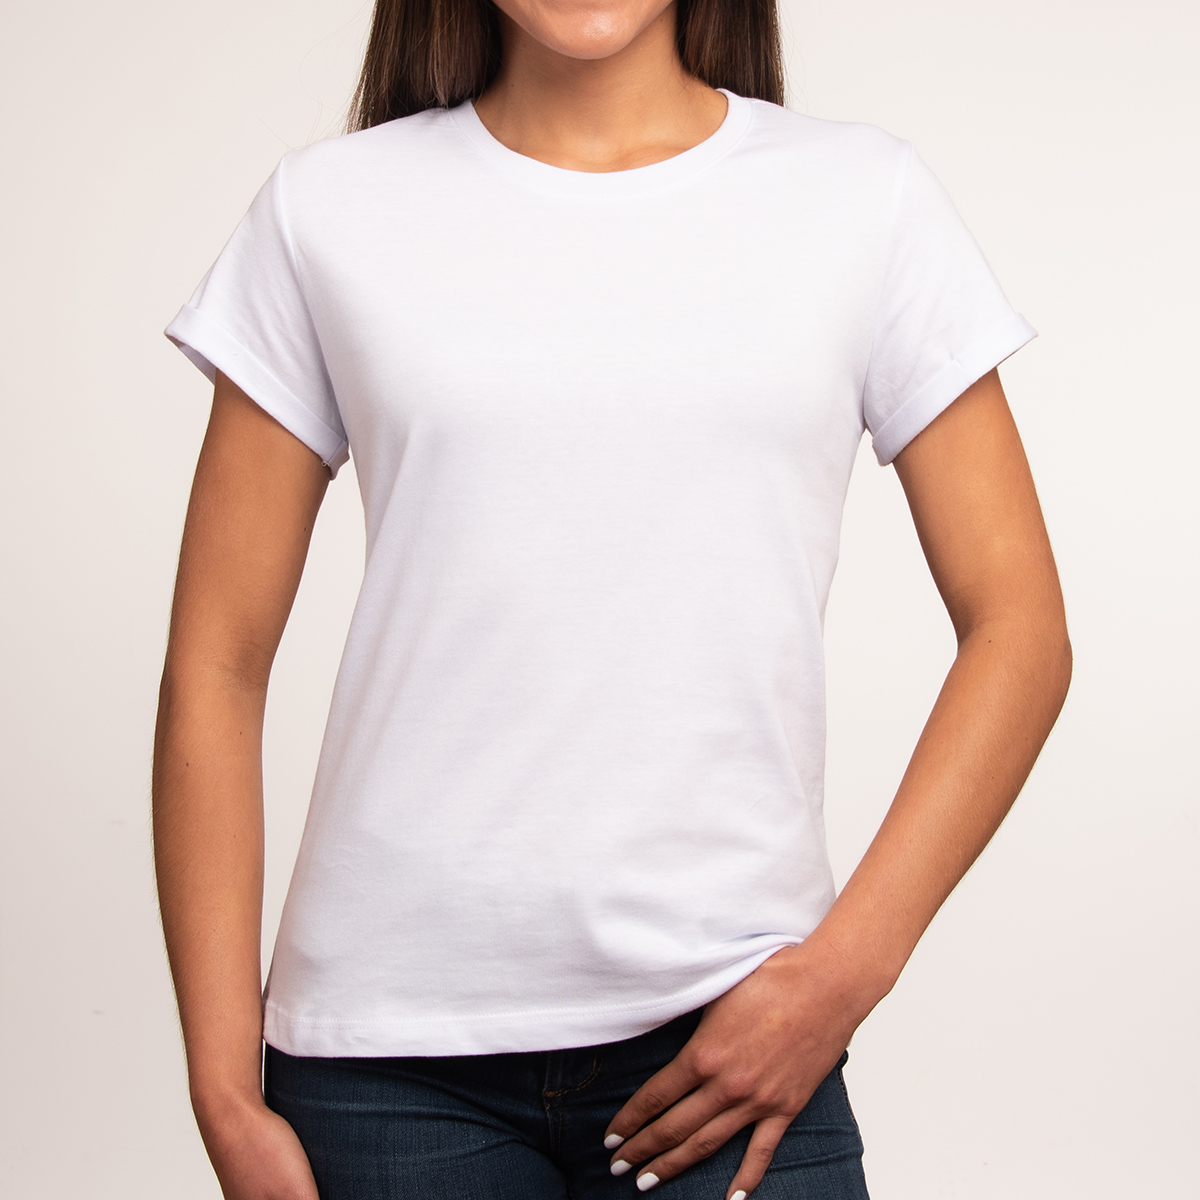 https://dondurazno.com/images/Camiseta-mujer-estampada-blanca.jpg